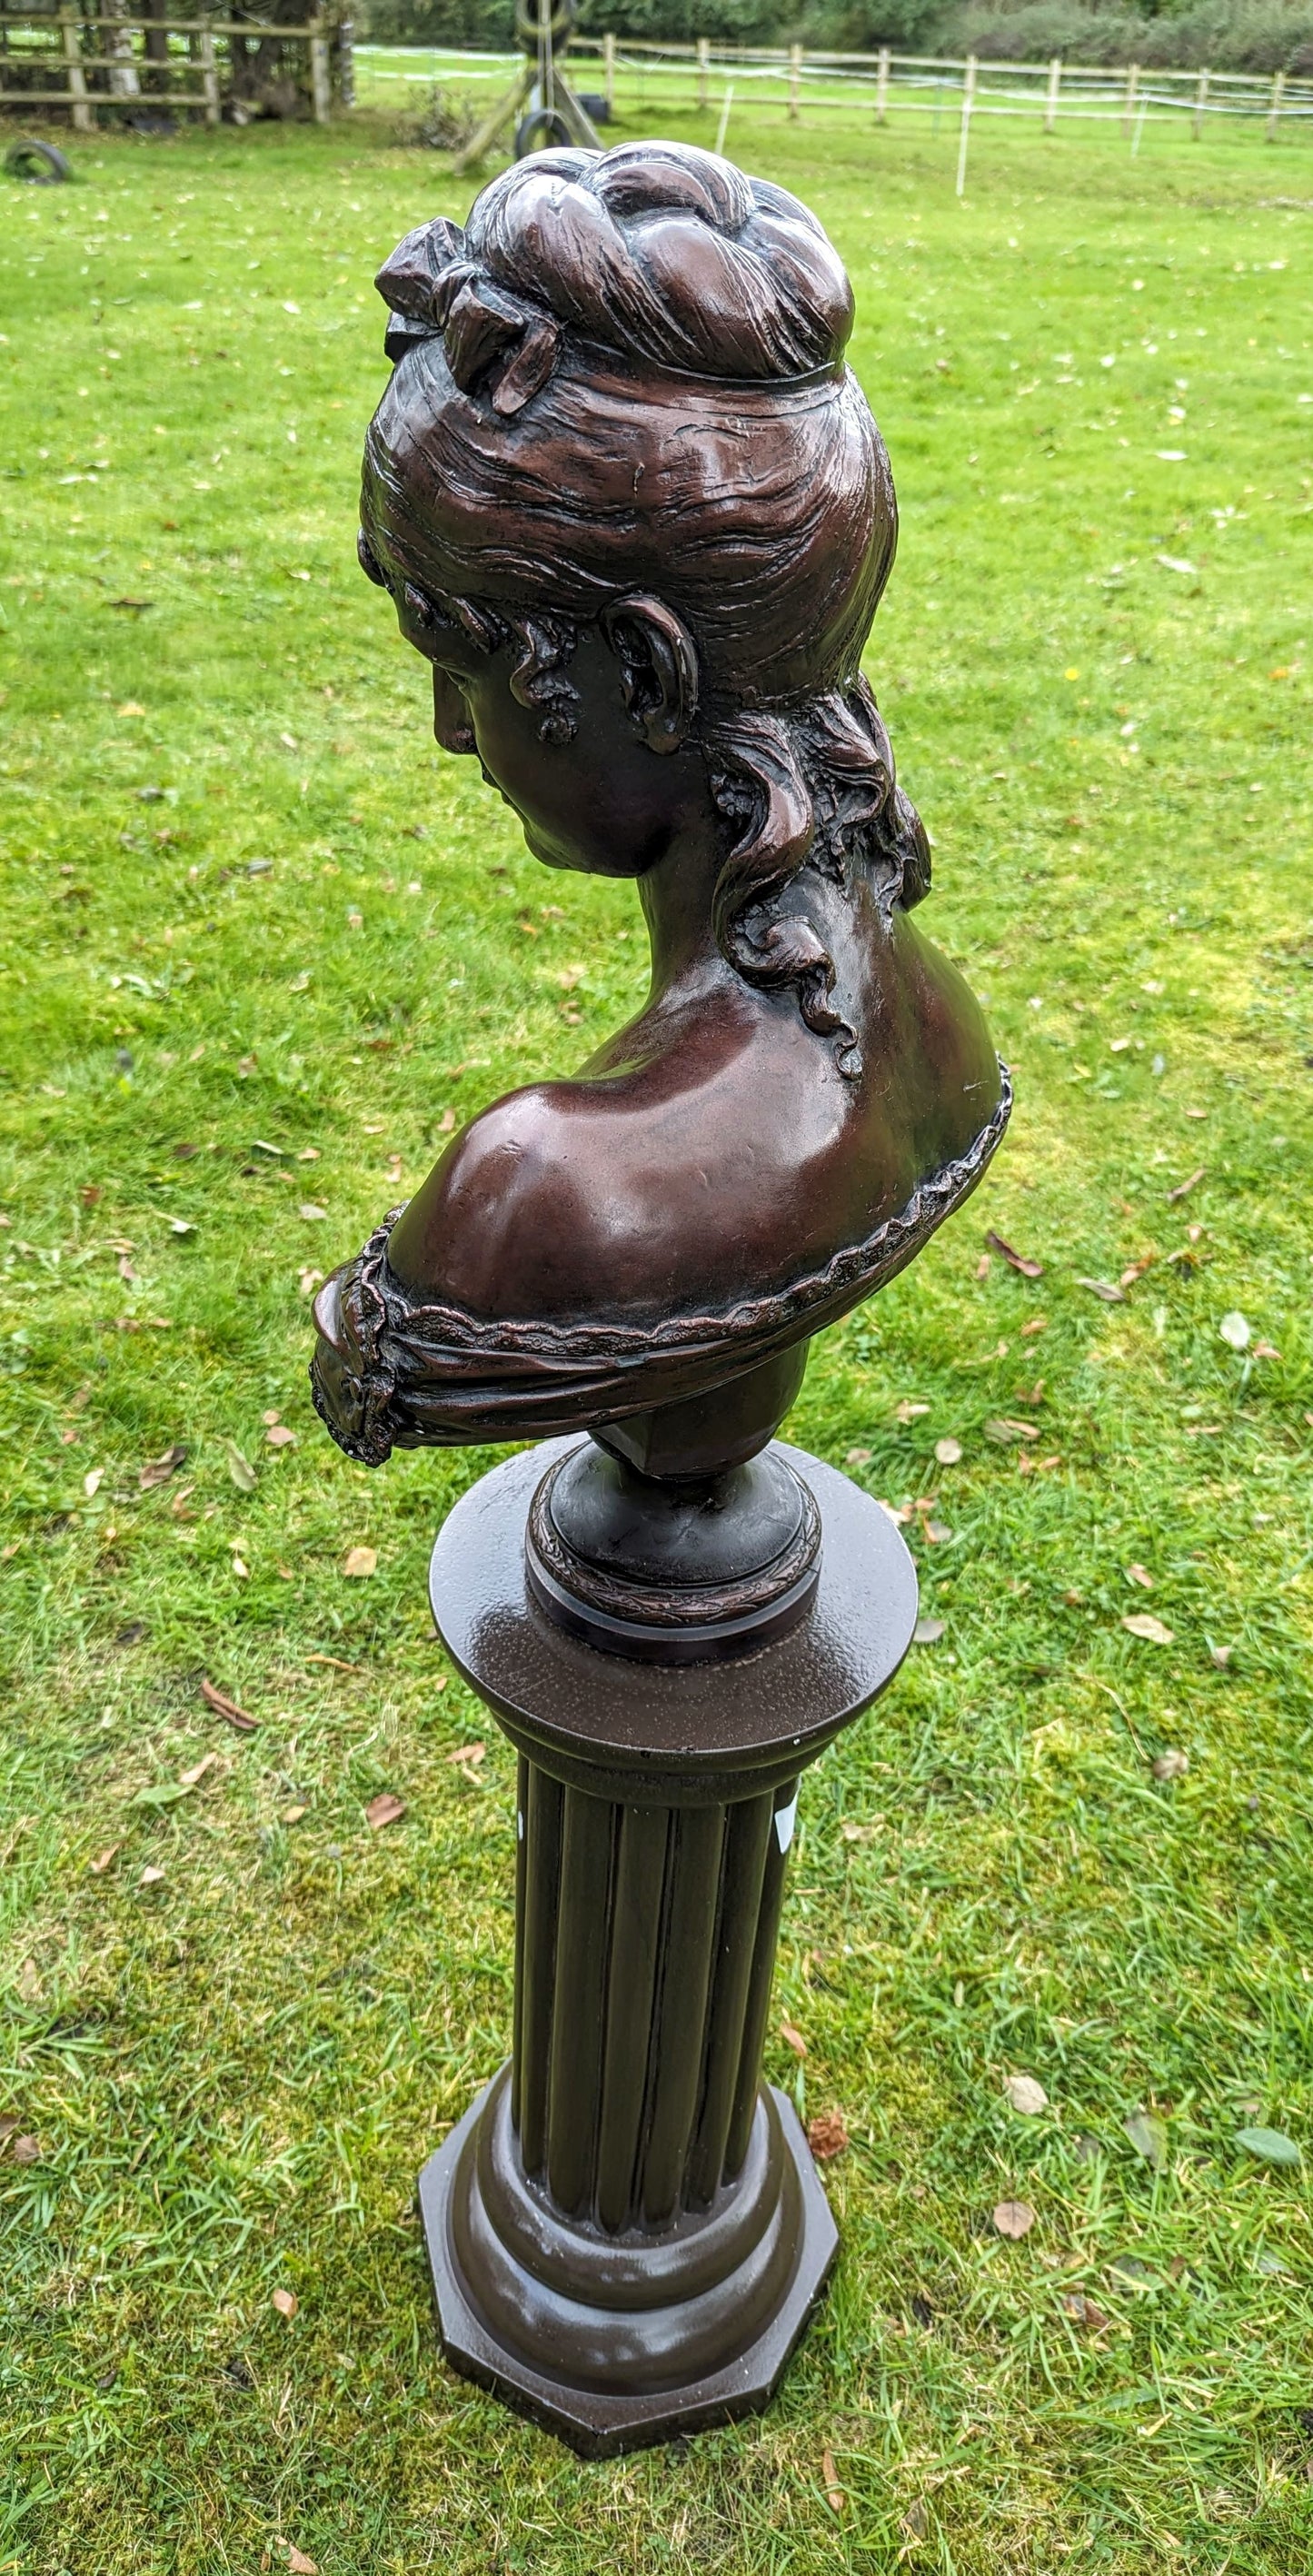 Late 19th century bronzed bust & column